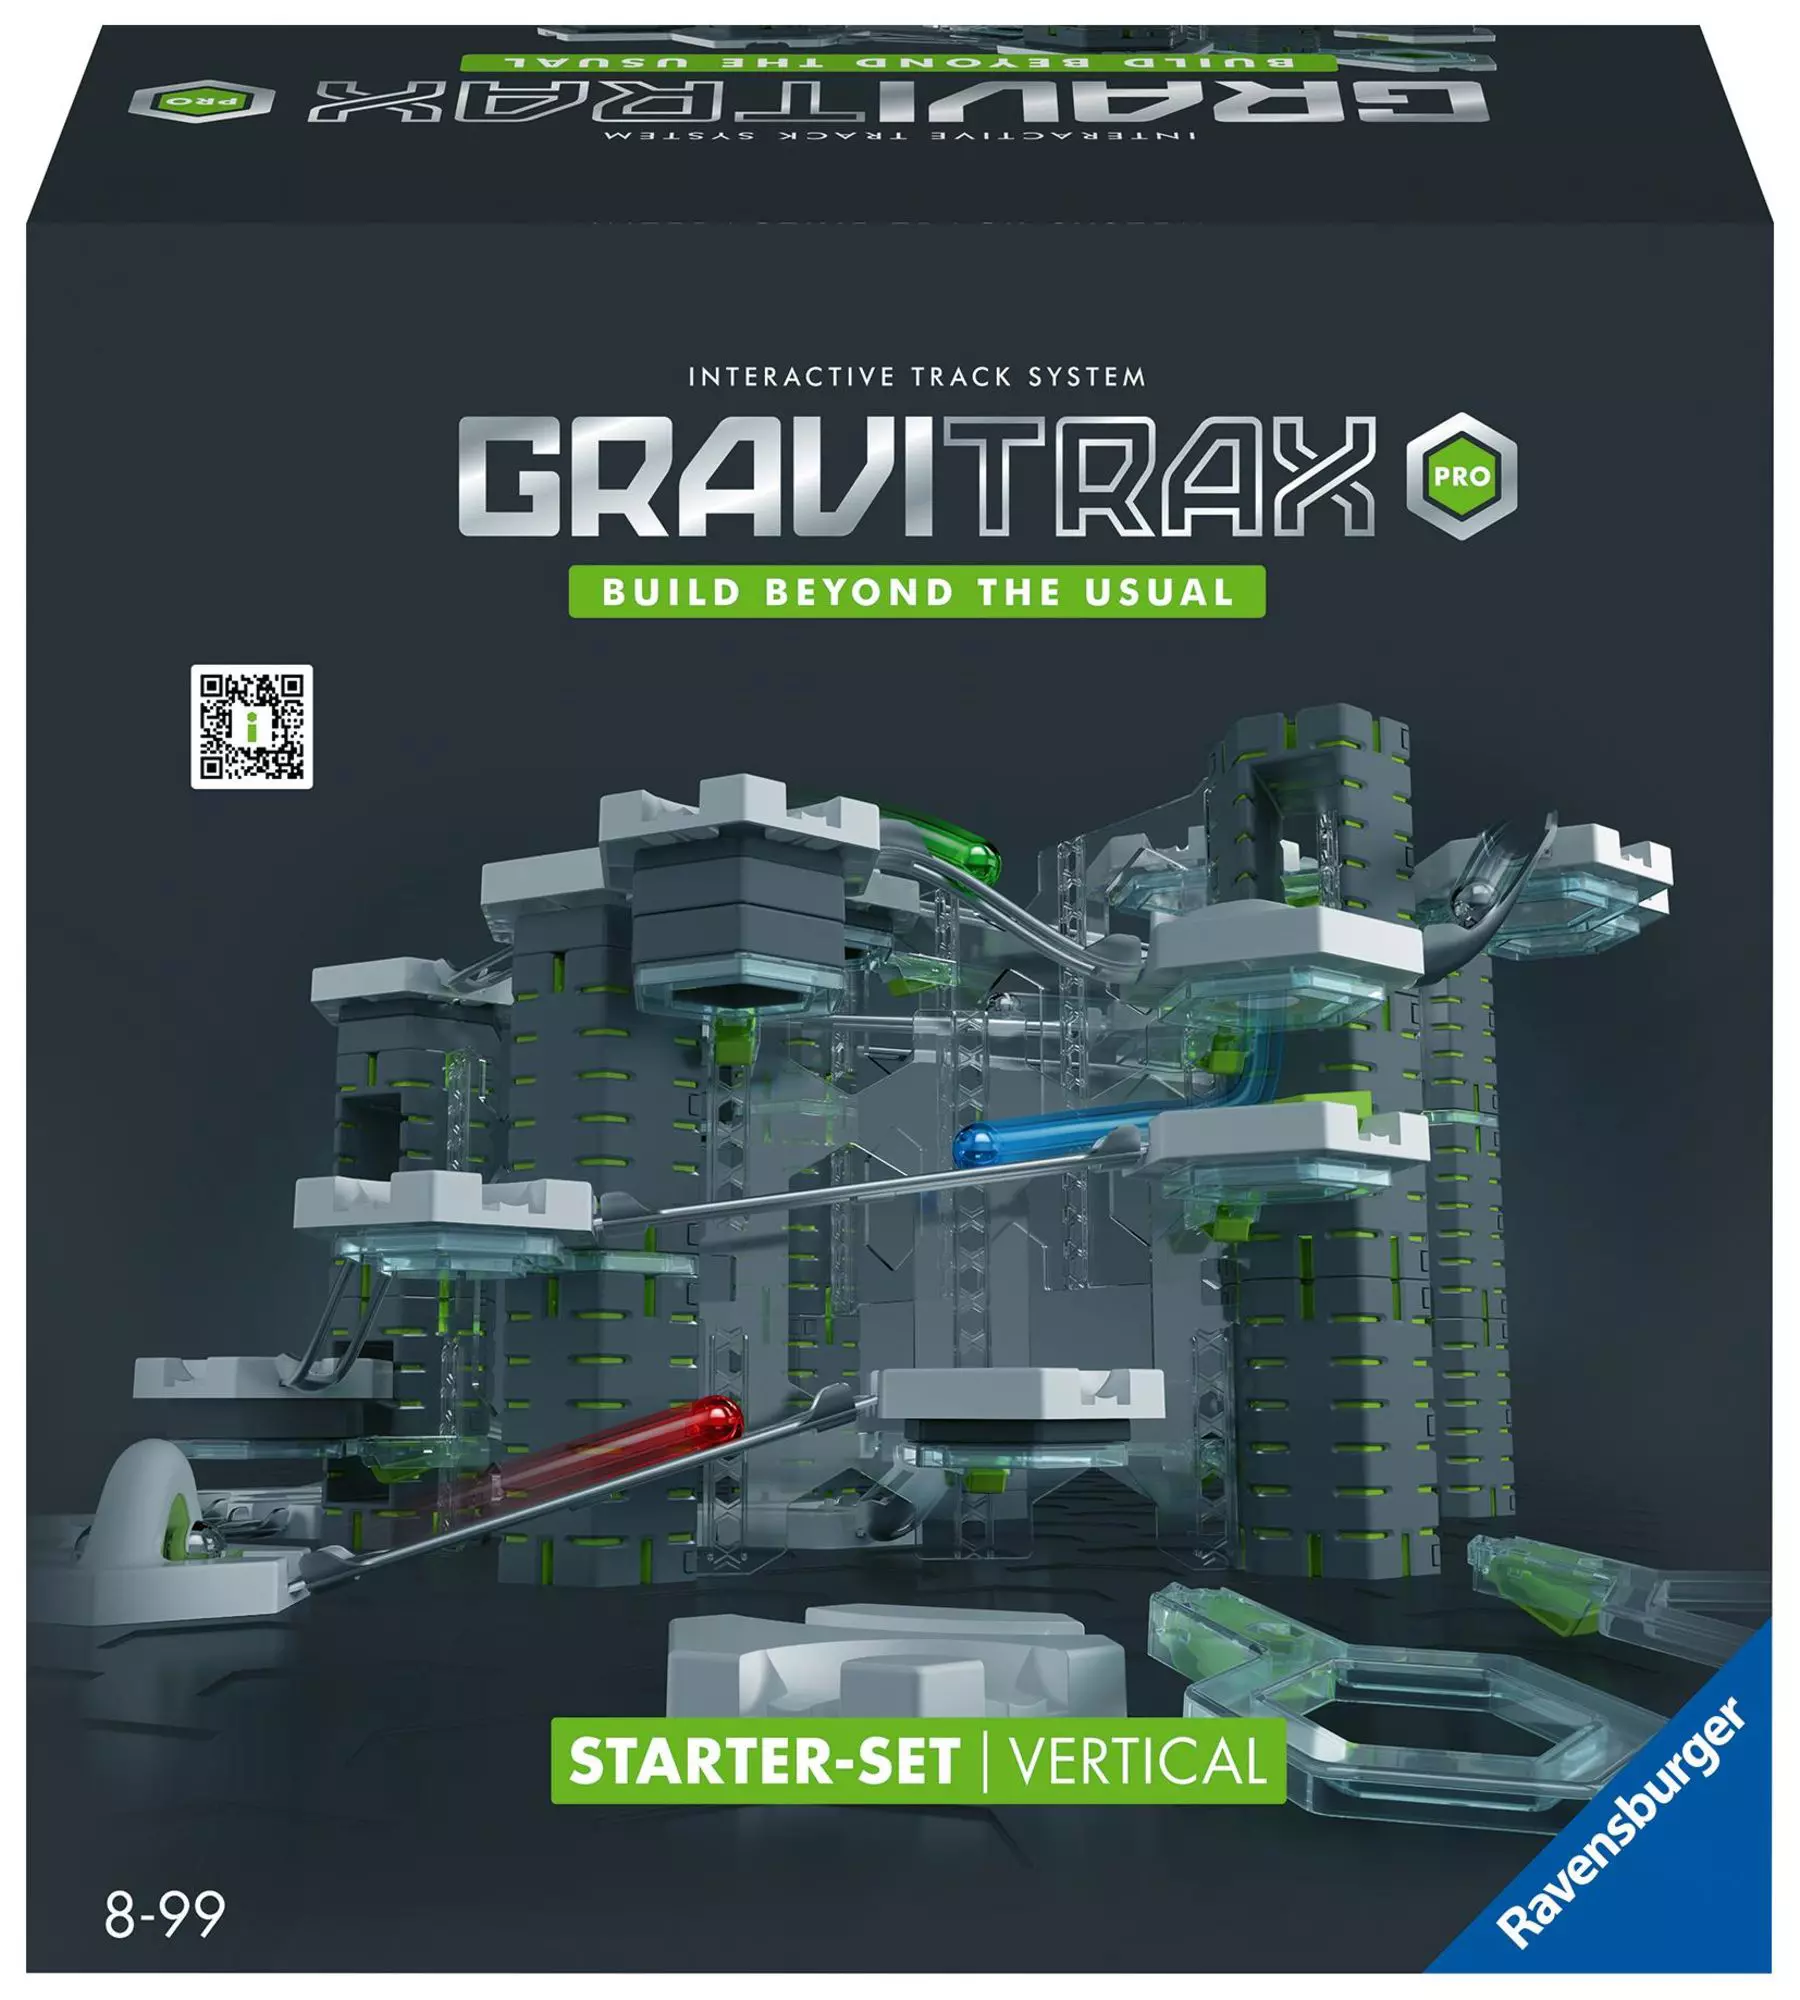 Gravitrax Pro Starter-Set Vertical 10922426